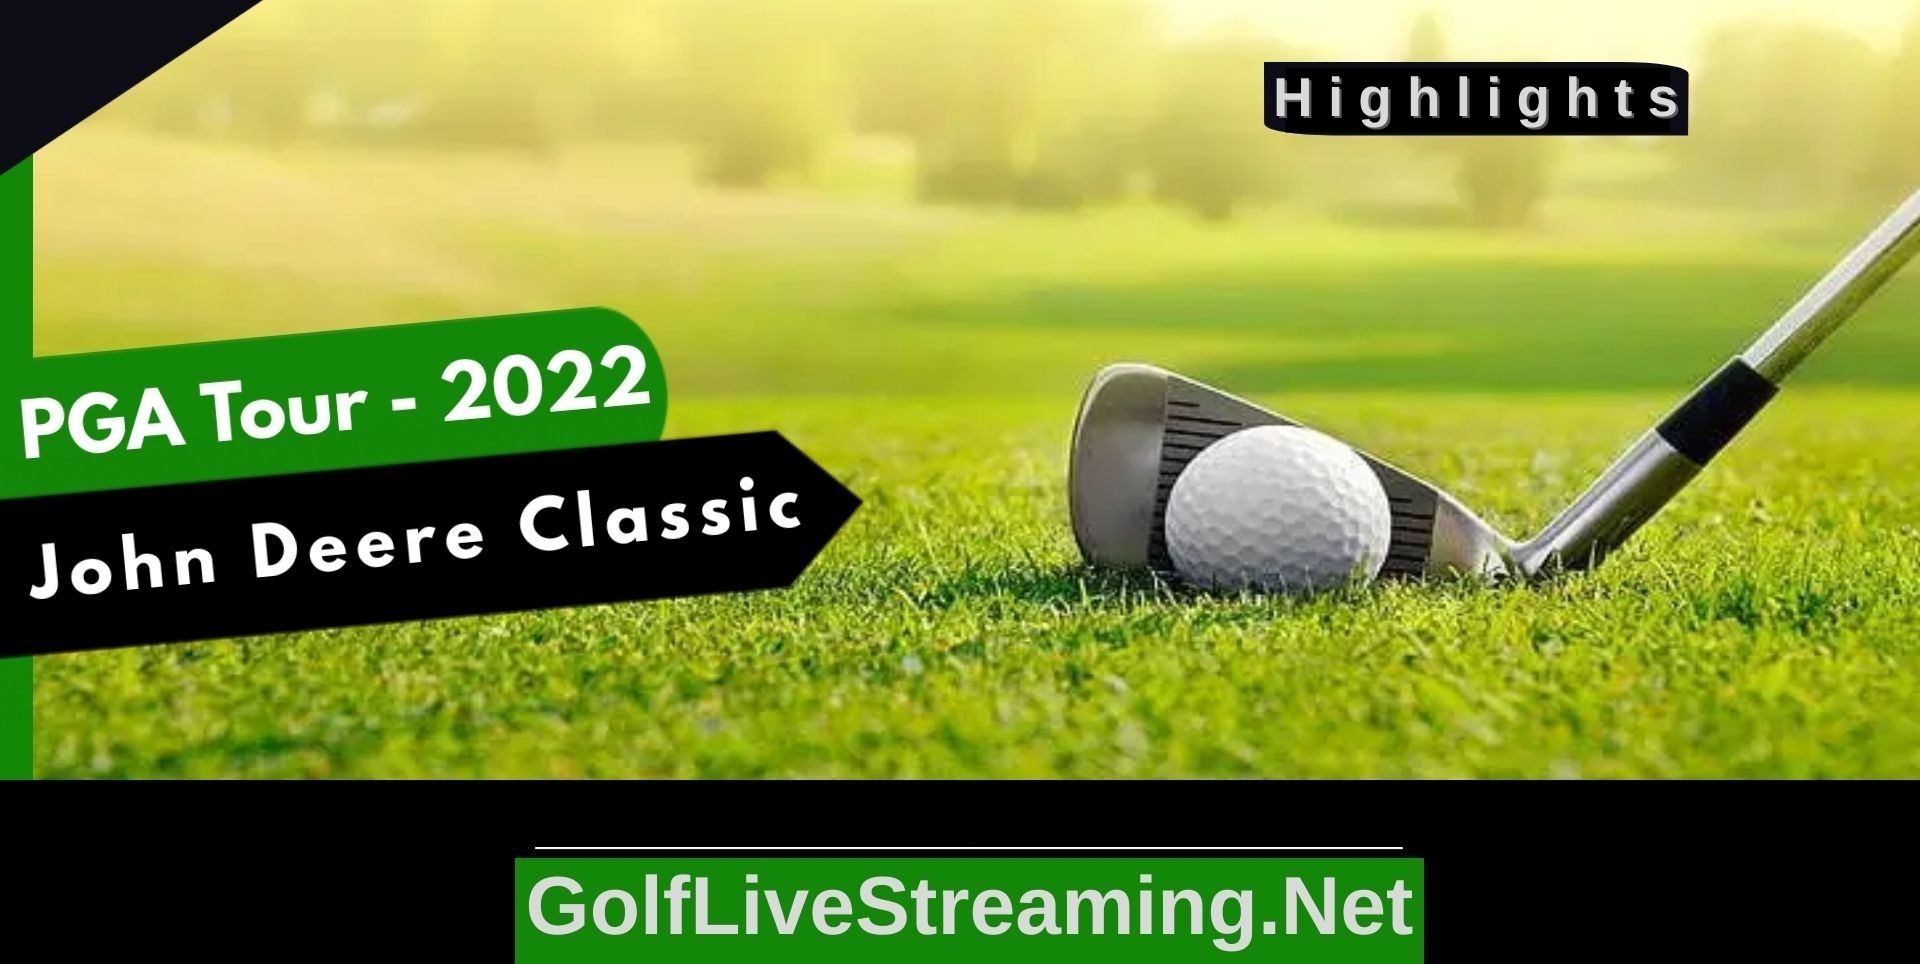 John Deere Classic Round 1 Highlights 2022 PGA Tour